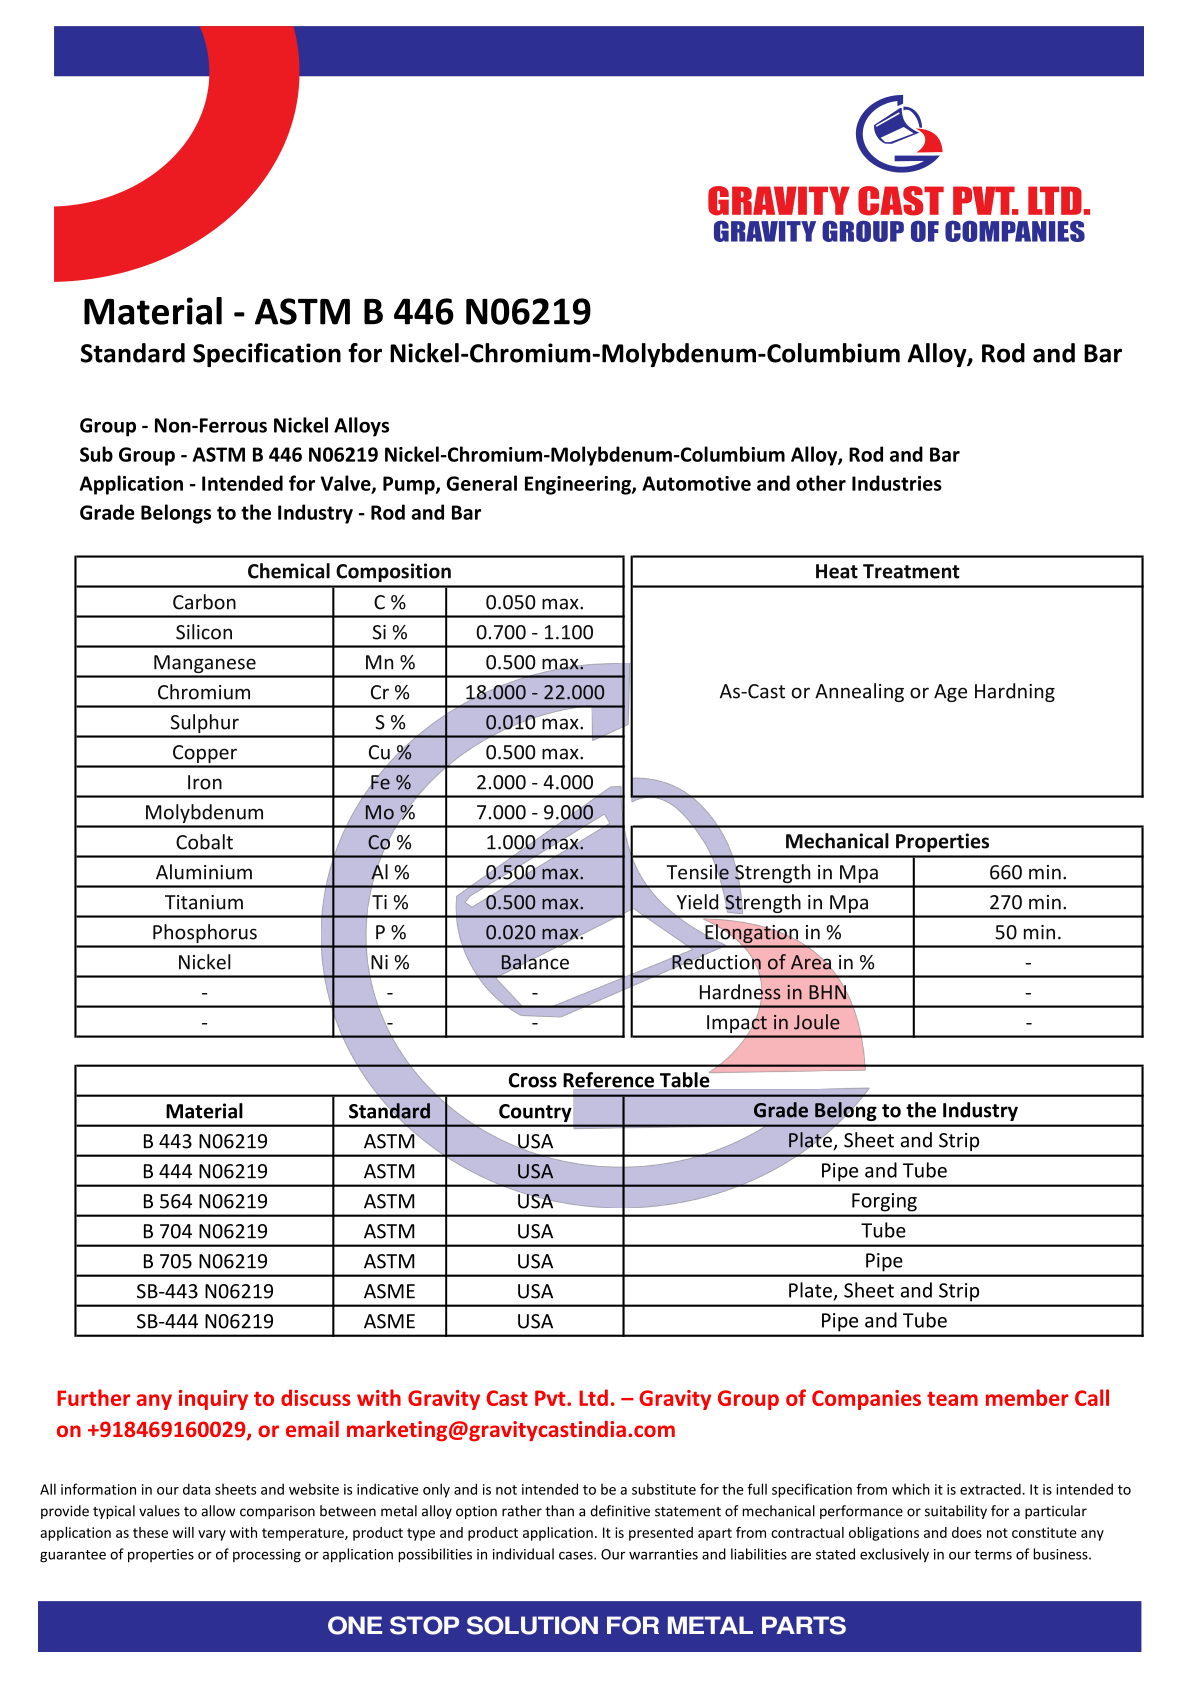 ASTM B 446 N06219.pdf